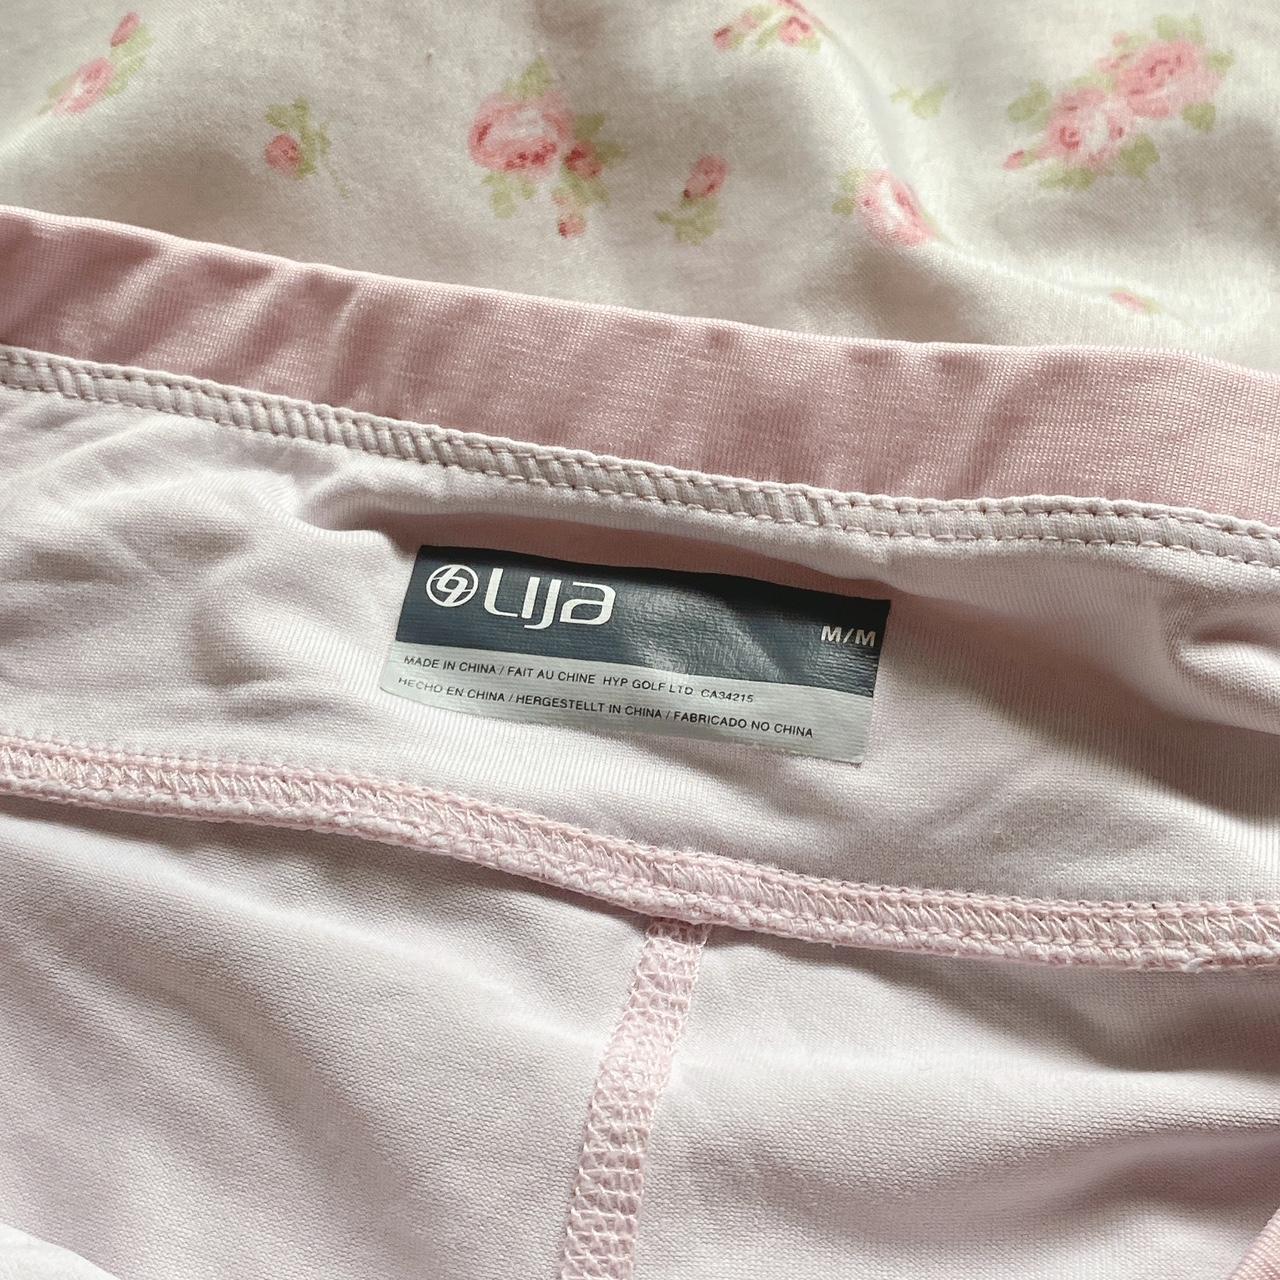 Cute baby pink tennis mini skirt - never worn -... - Depop